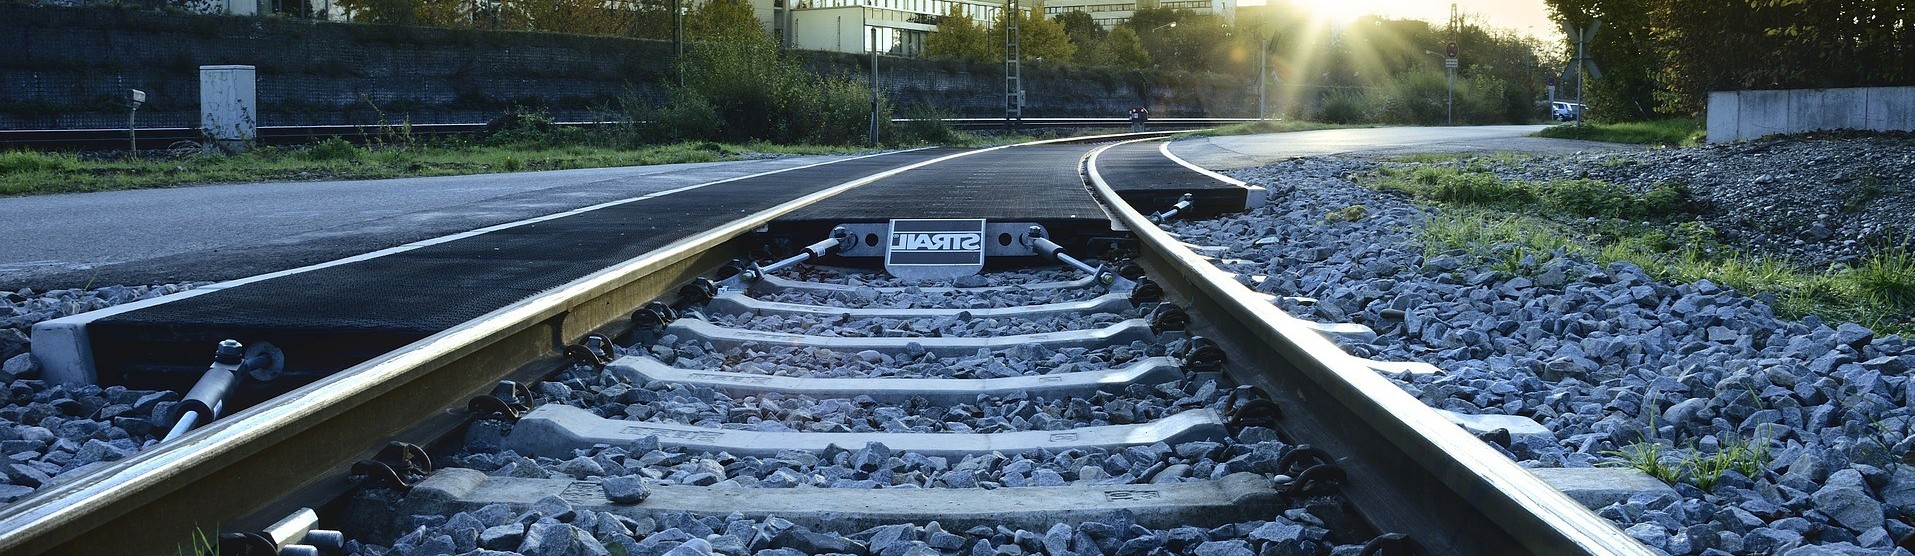 An empty railroad track representing the customer feedback survey for propane provider Hopkins Propane in Shelbyville, MI